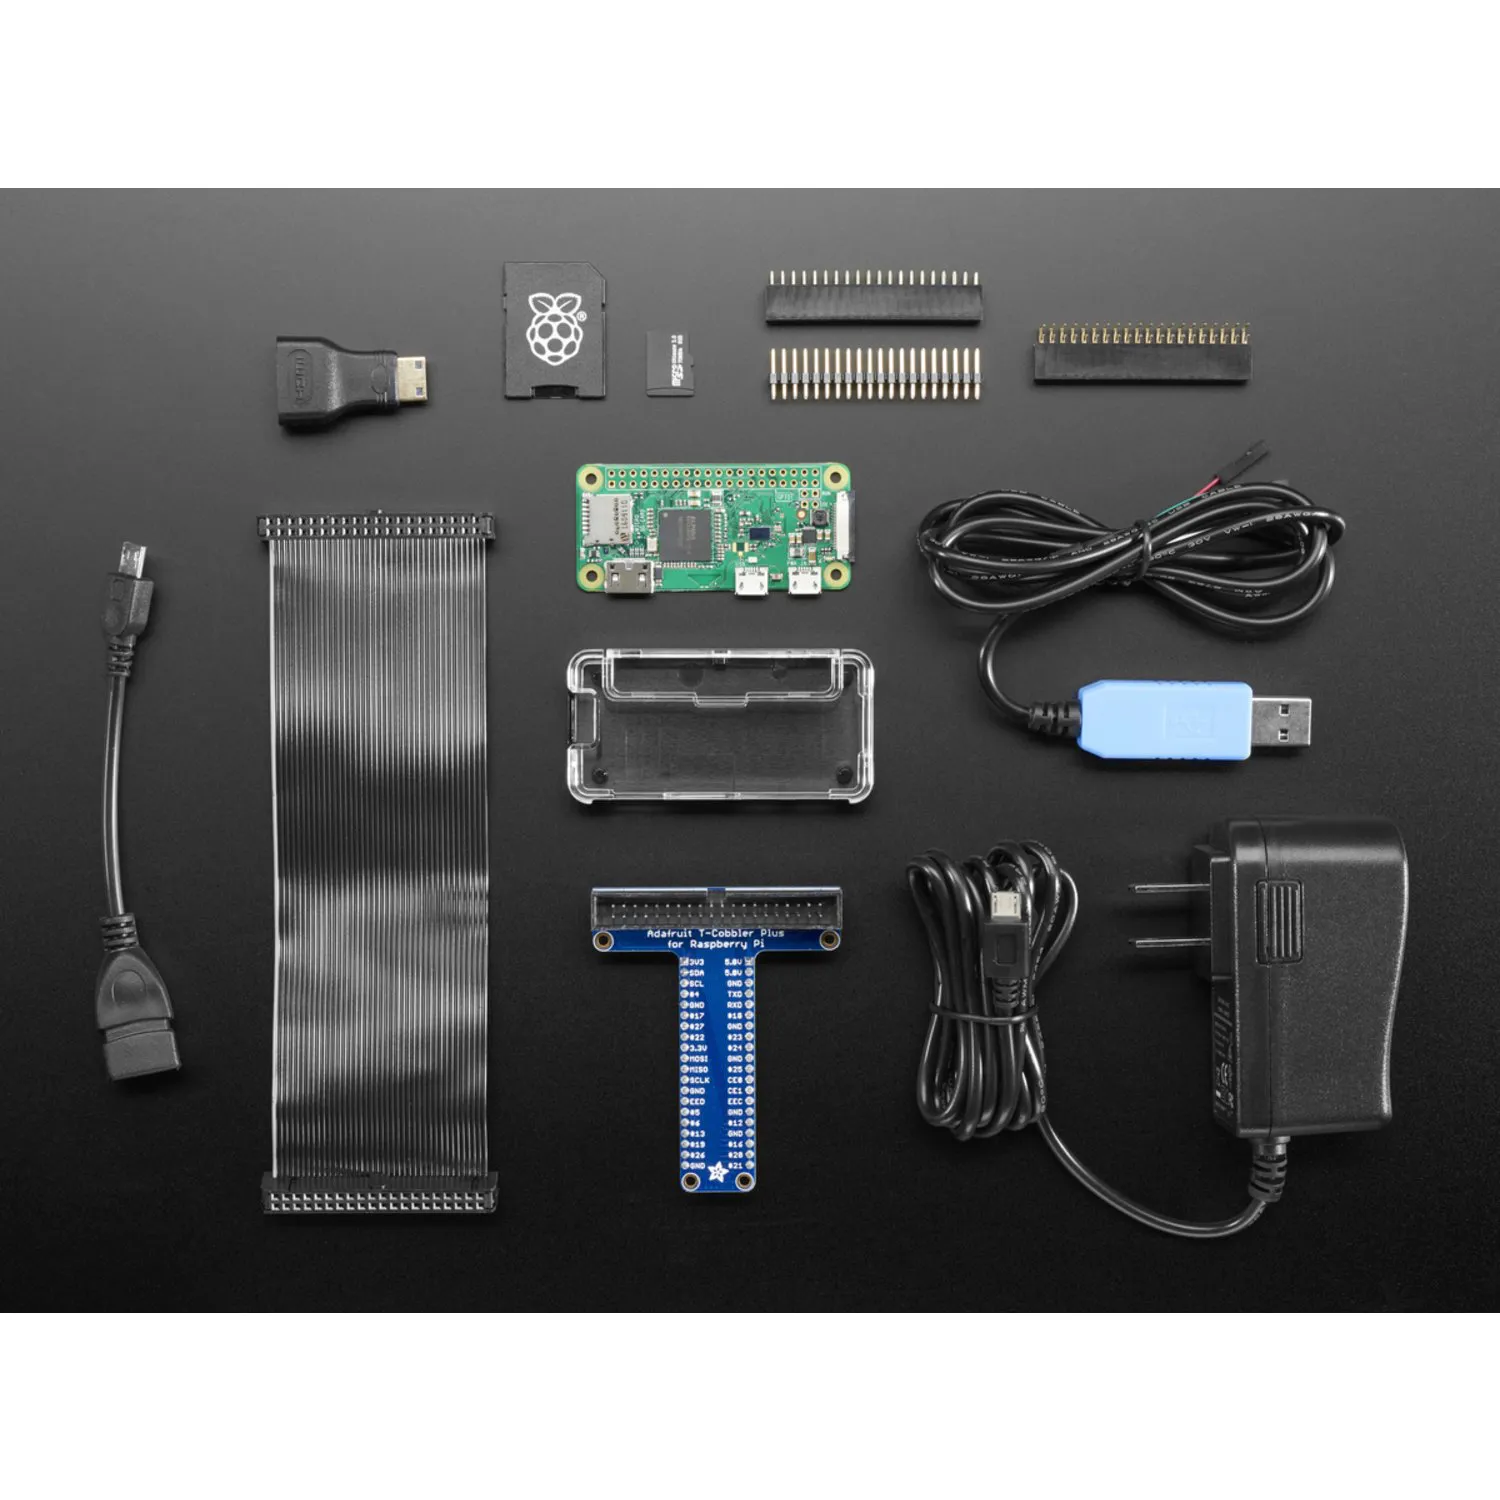 Photo of Raspberry Pi Zero W Starter Pack - Includes Pi Zero W